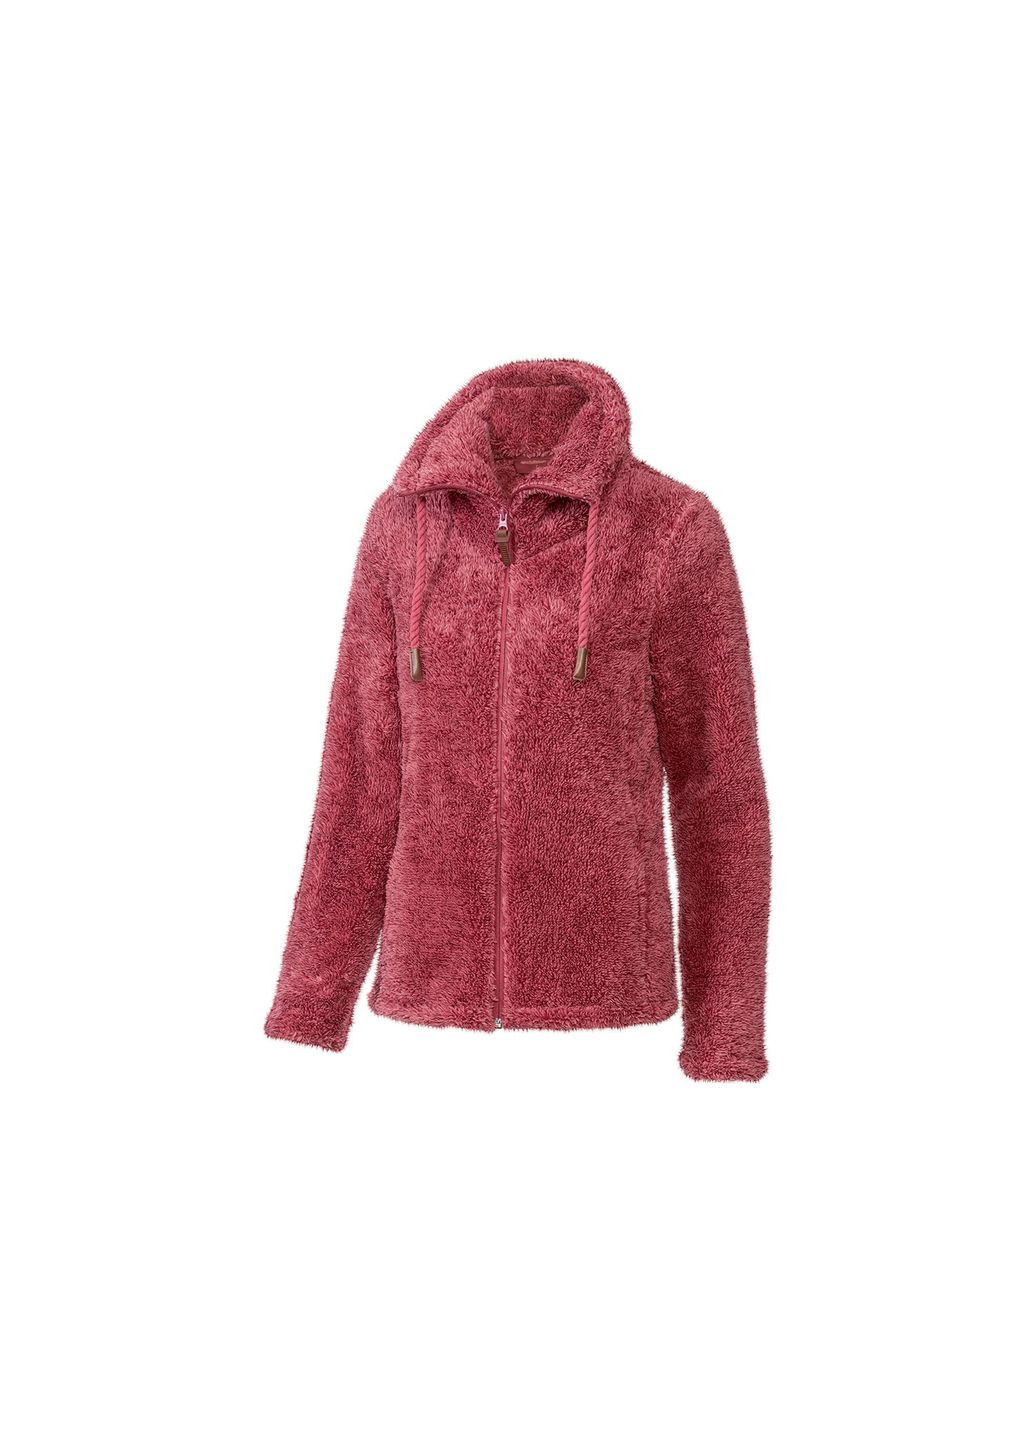 Розовая демисезонная куртка демисезонная плюшевая для женщины dope dyed 358111 Crivit